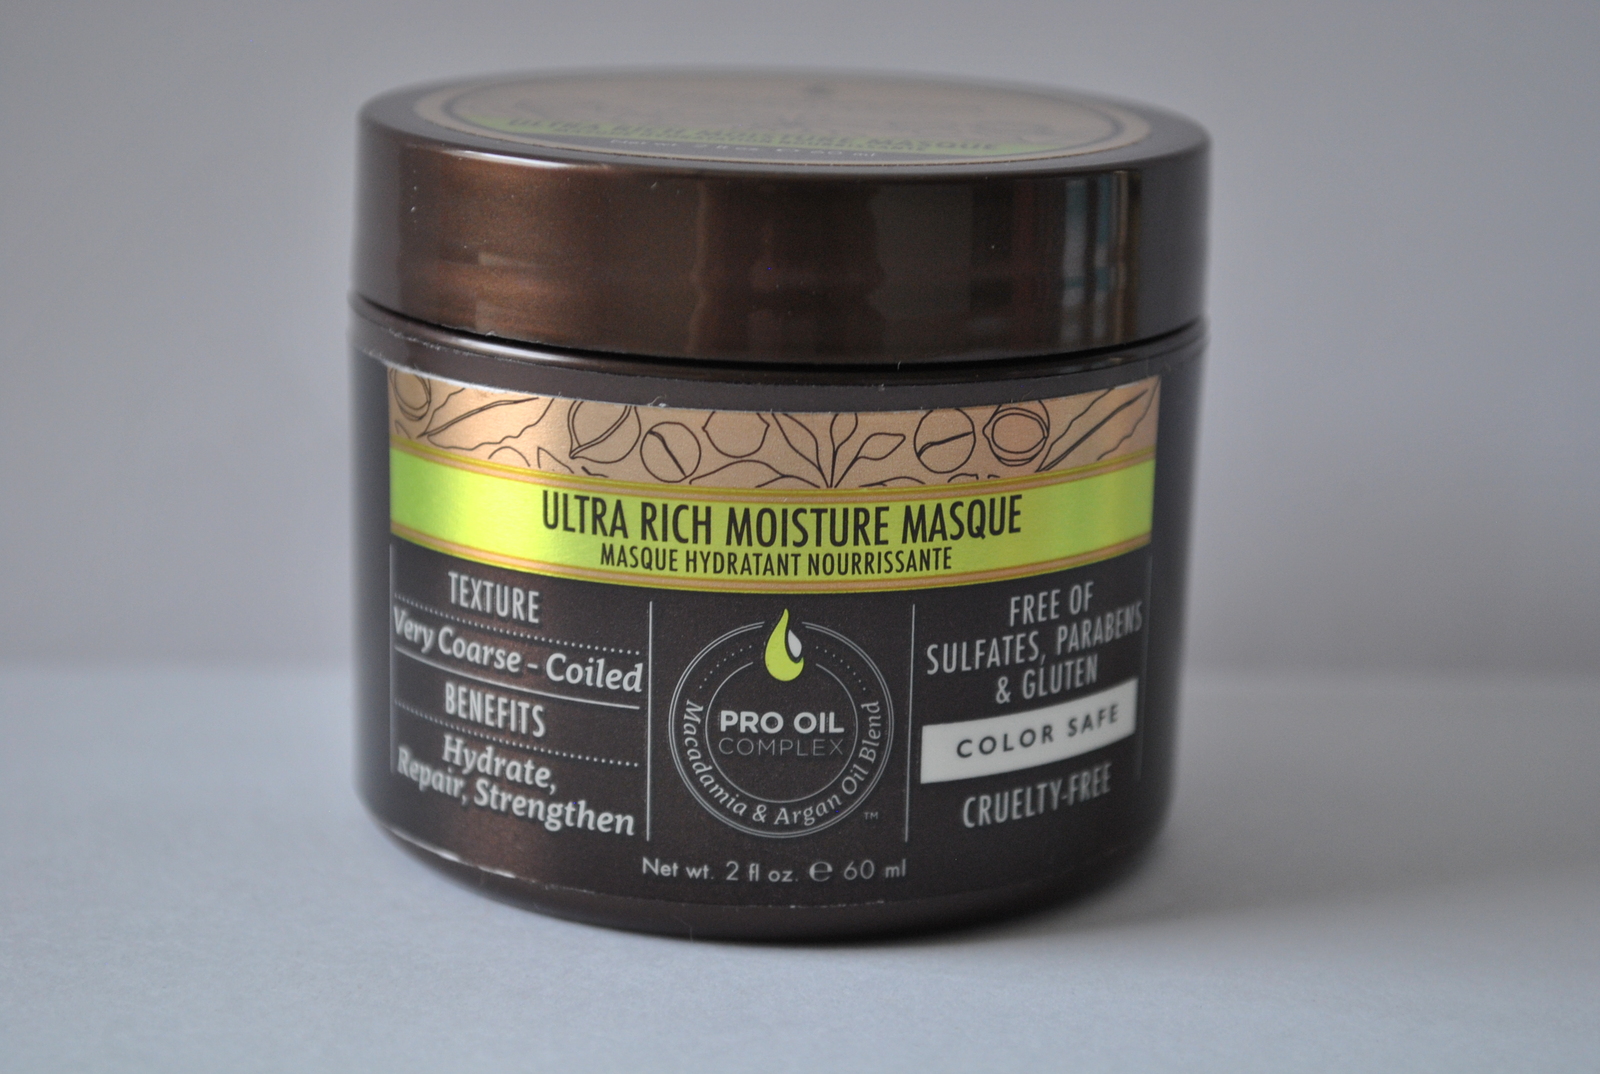 Macadamia Professional Ultra Rich Moisture Masque 2 Fl oz / 60 ml - travel - $14.60